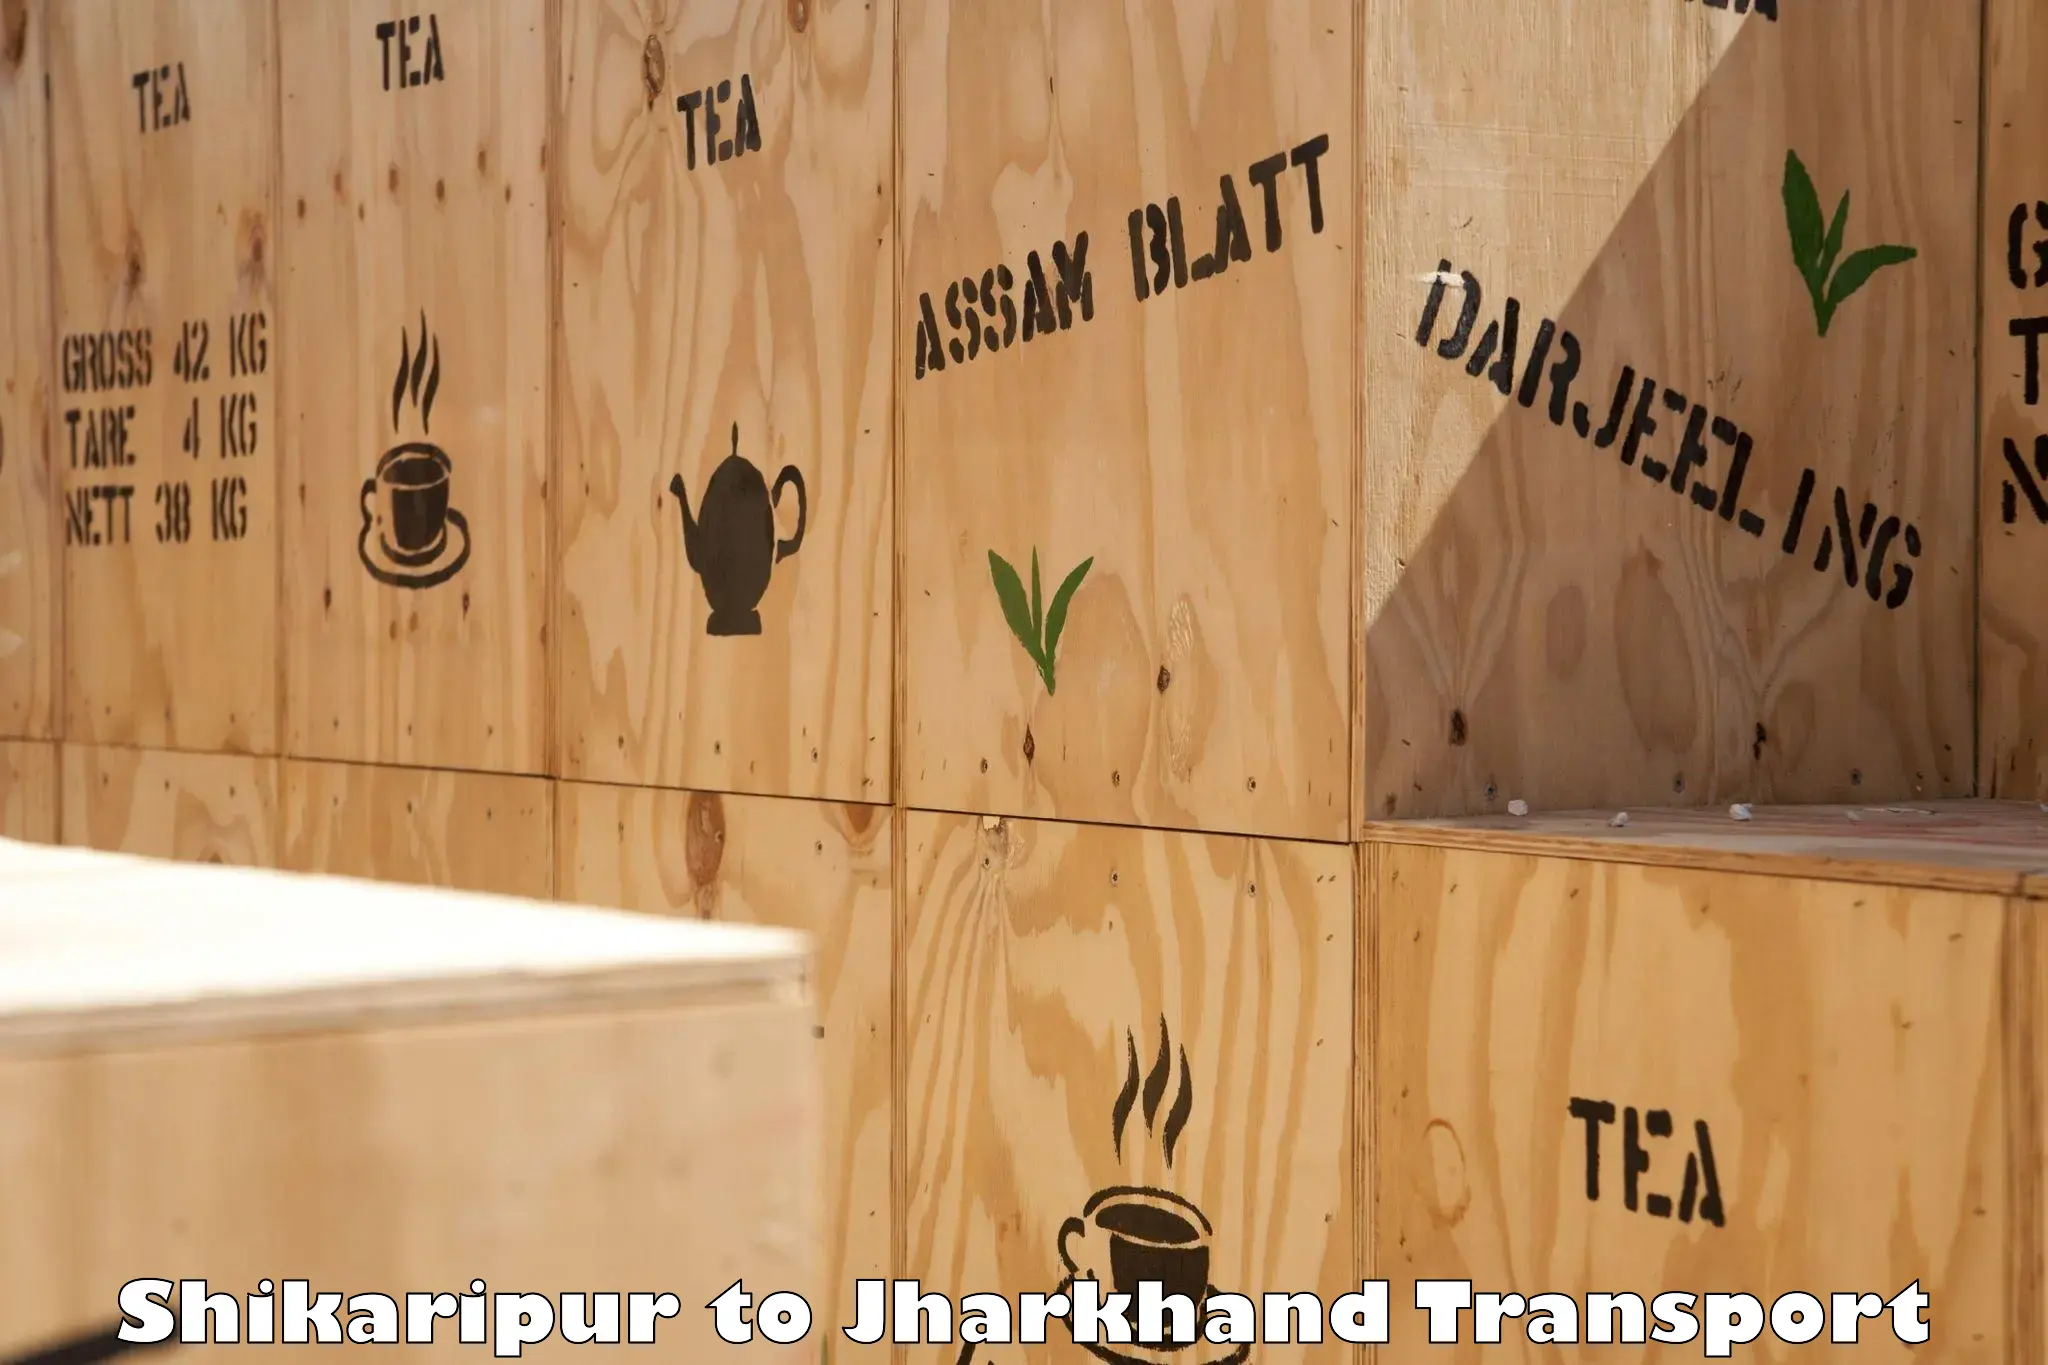 Truck transport companies in India Shikaripur to Ranchi